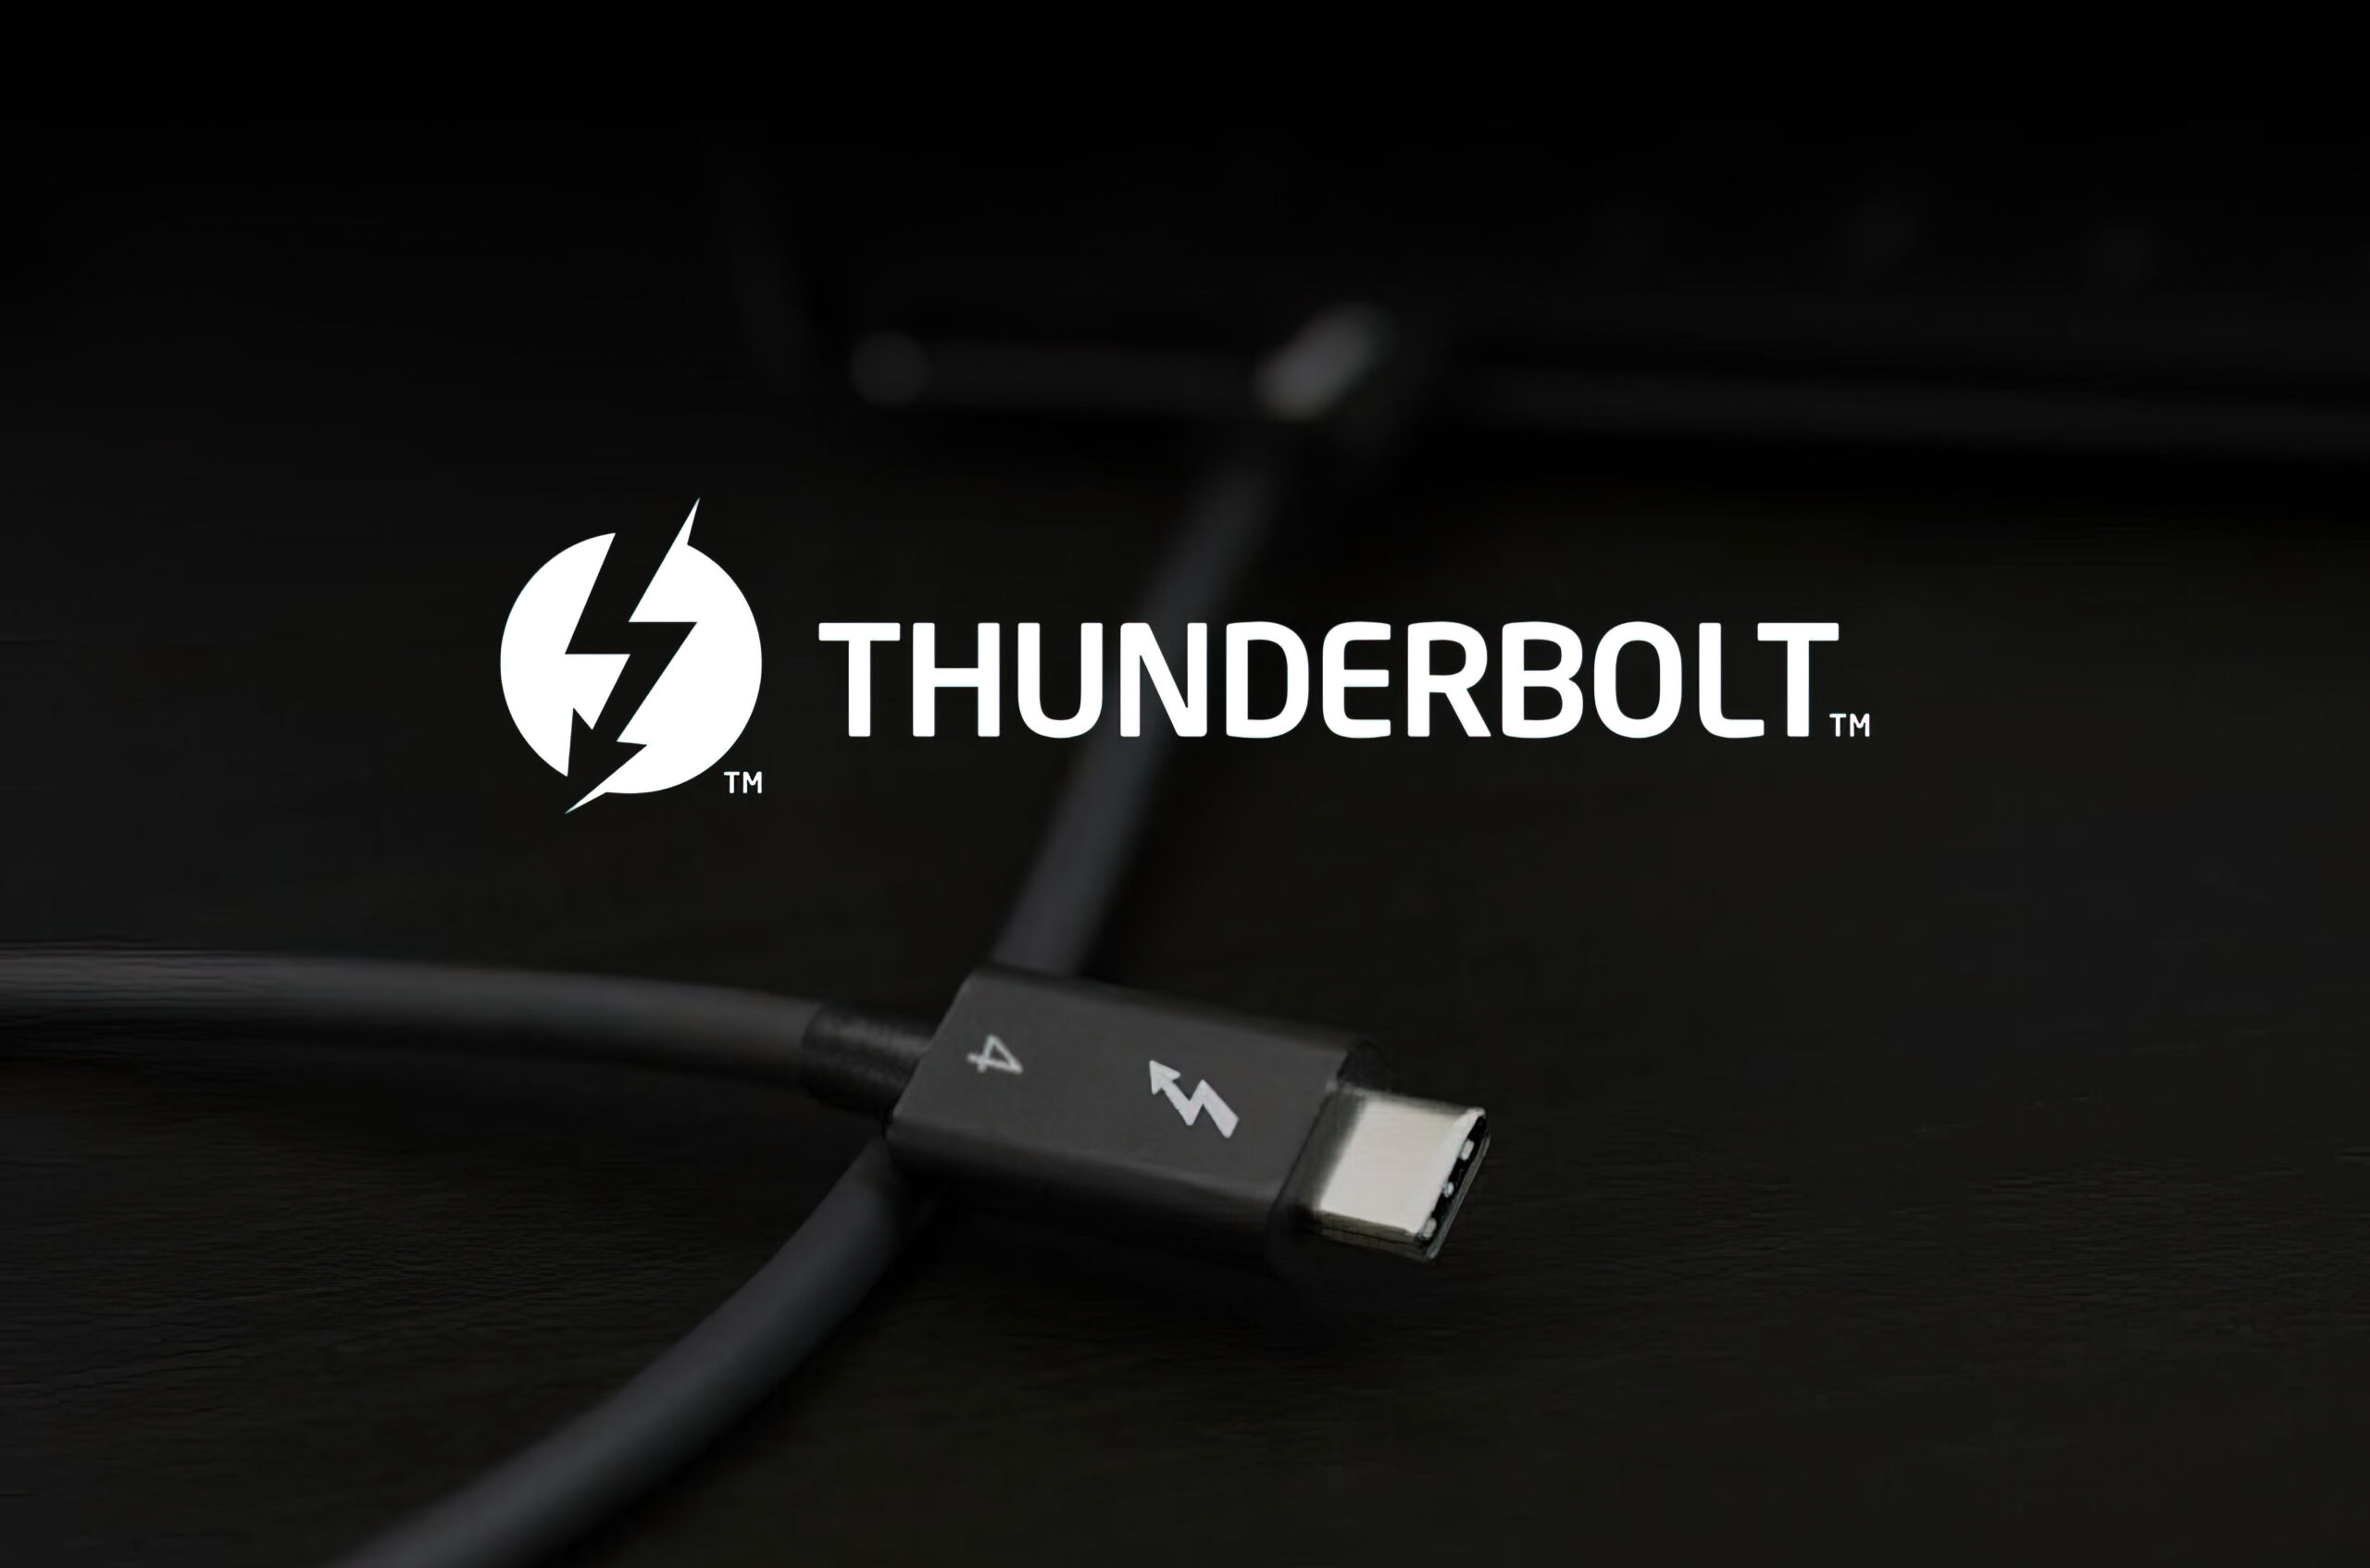 Alternativas baratas al cable USB-C Thunderbolt 4 Pro de Apple